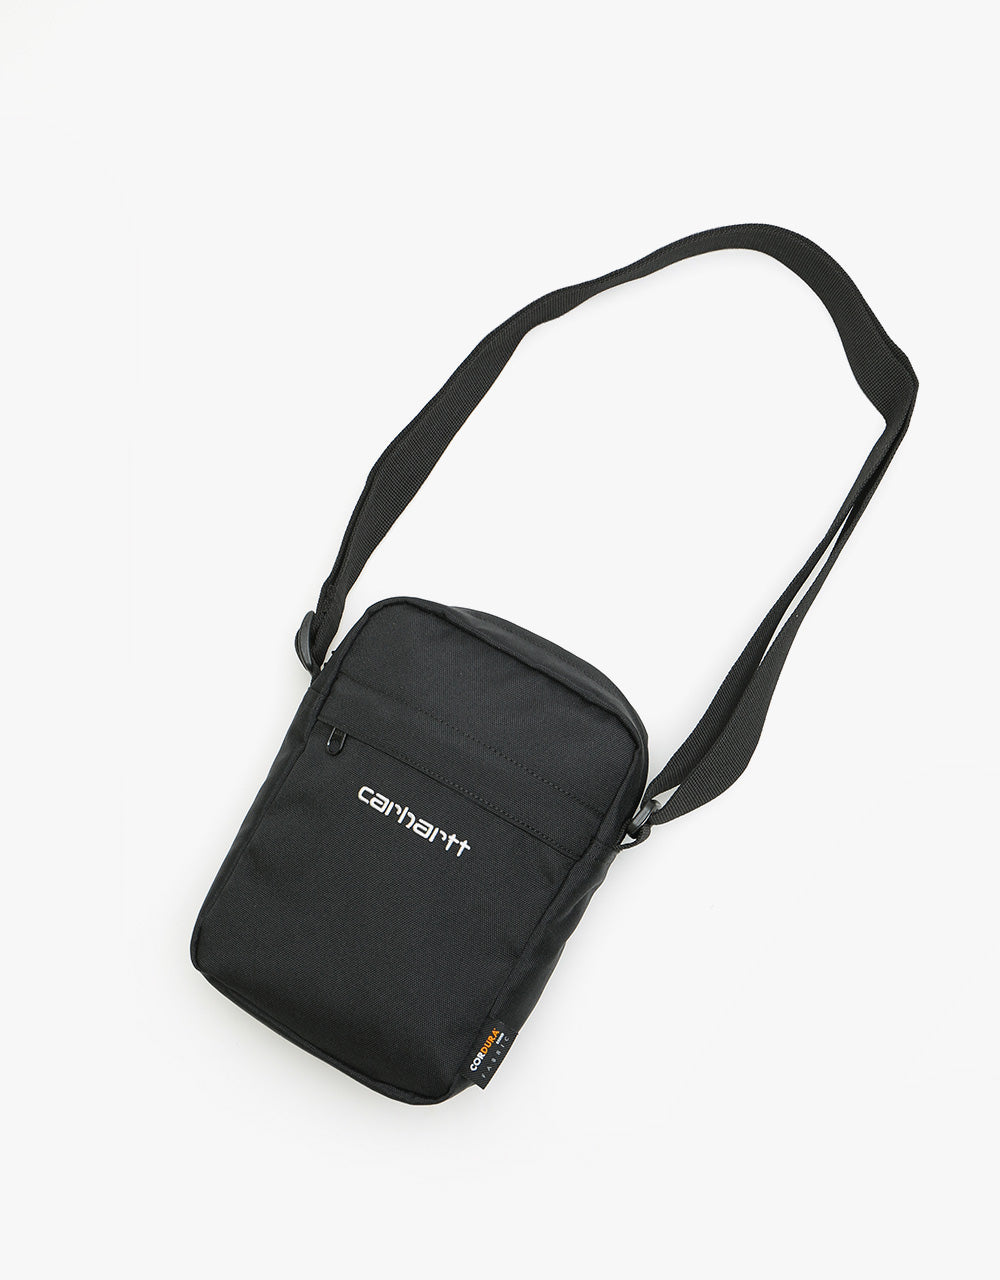 Carhartt WIP Payton Cross Body Bag - Black/White